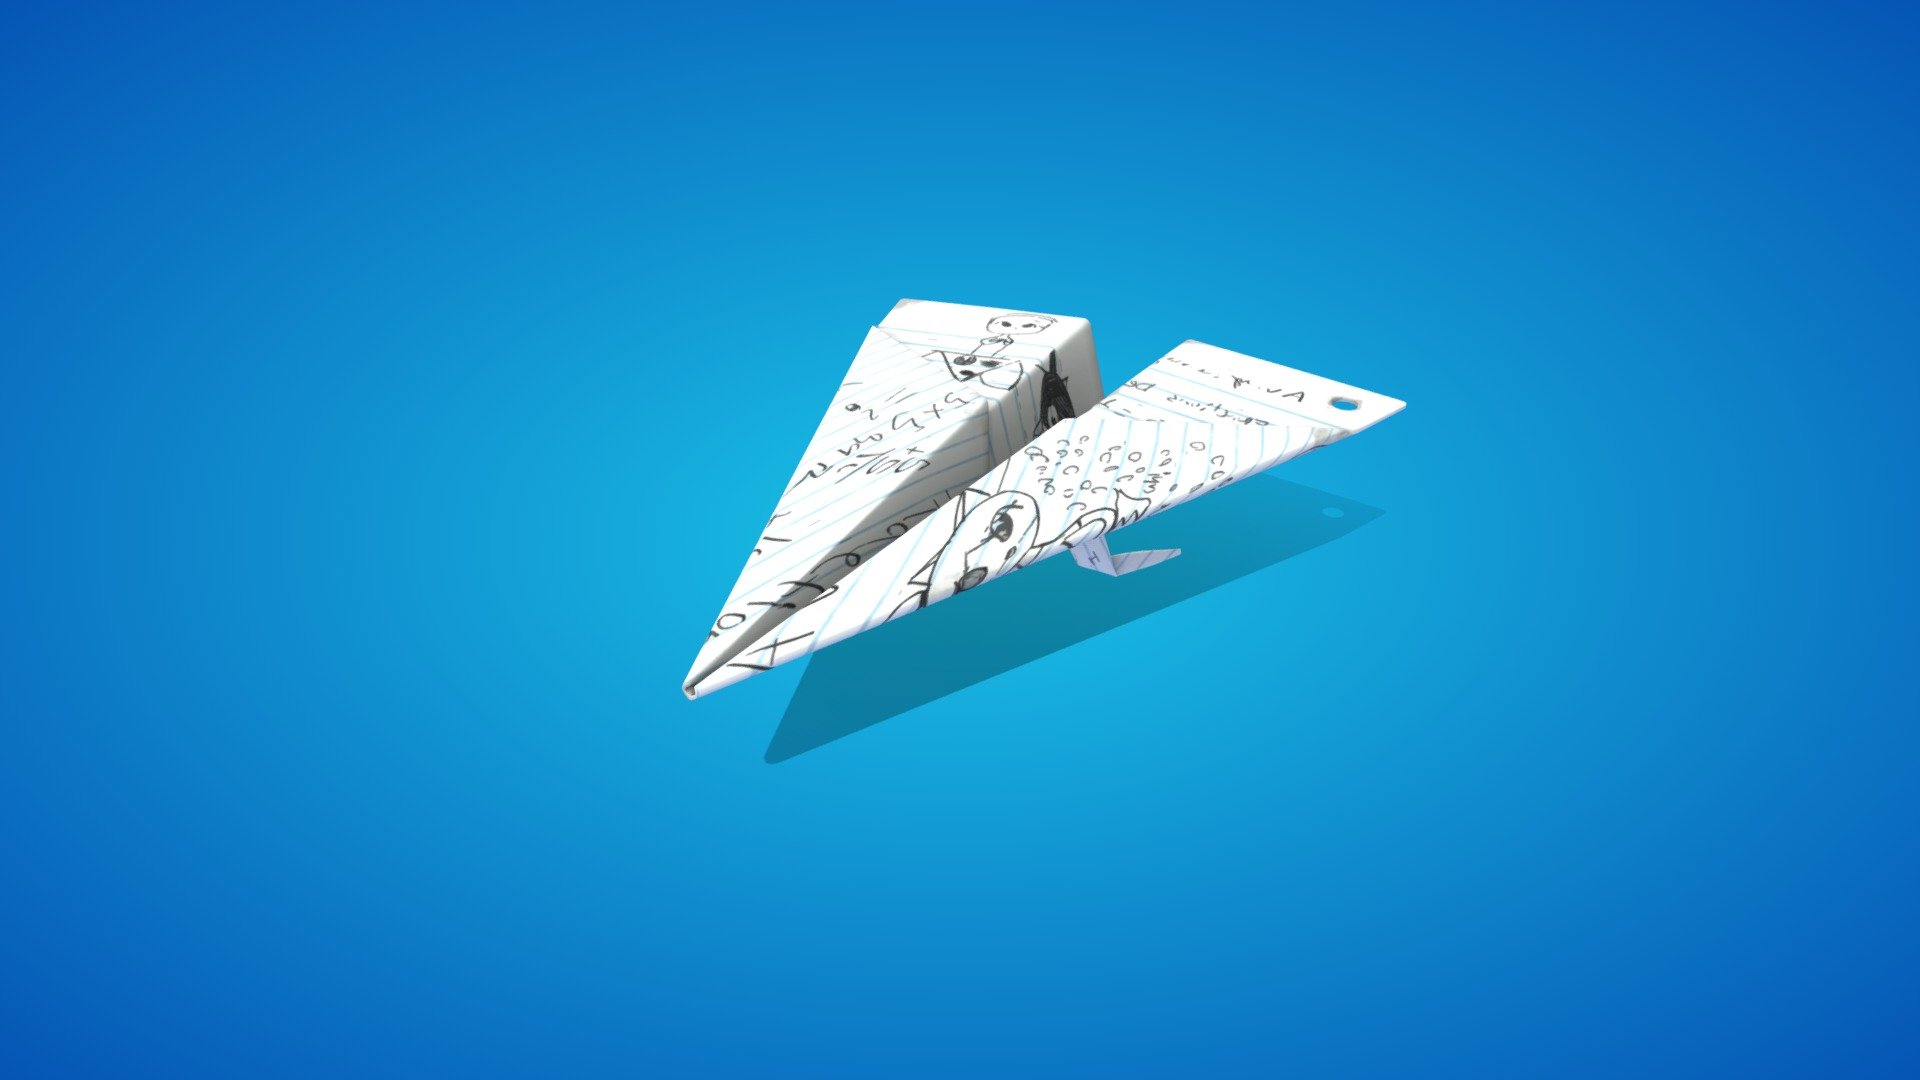 Fortnite Paper Glider Paper Plane Glider 3d Model By Fortnite Skins Fortniteskins Ace9814